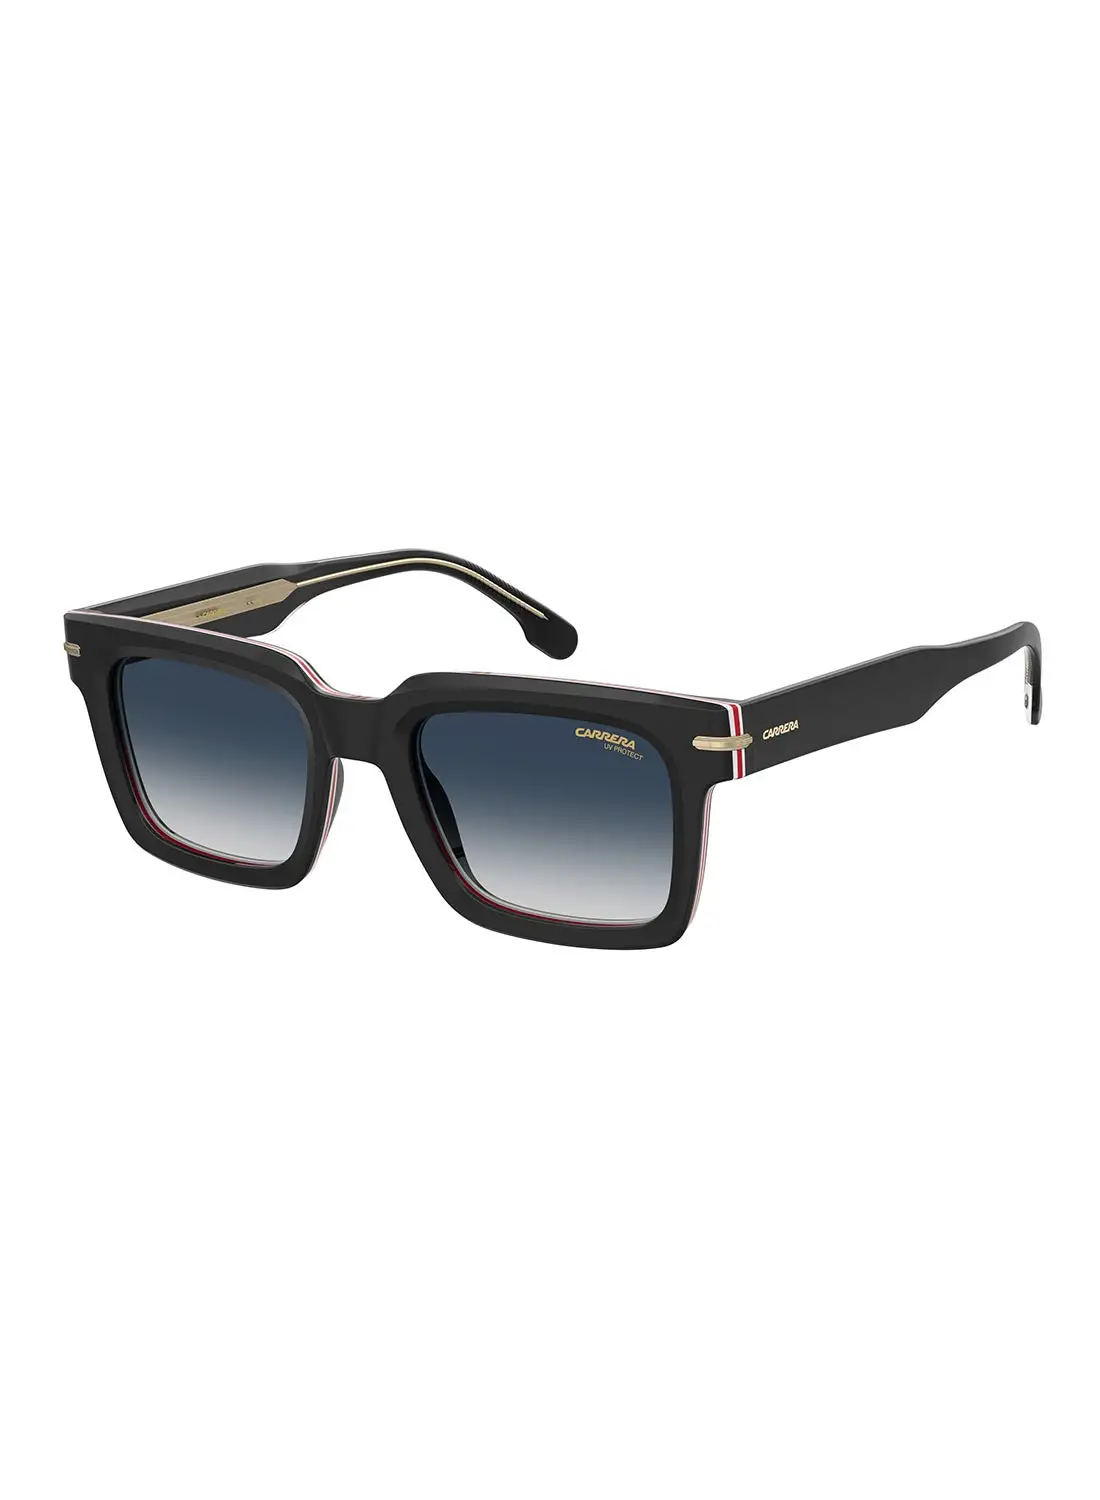 Carrera Men's UV Protection Rectangular Sunglasses - Carrera 316/S Black Millimeter - Lens Size: 52 Mm